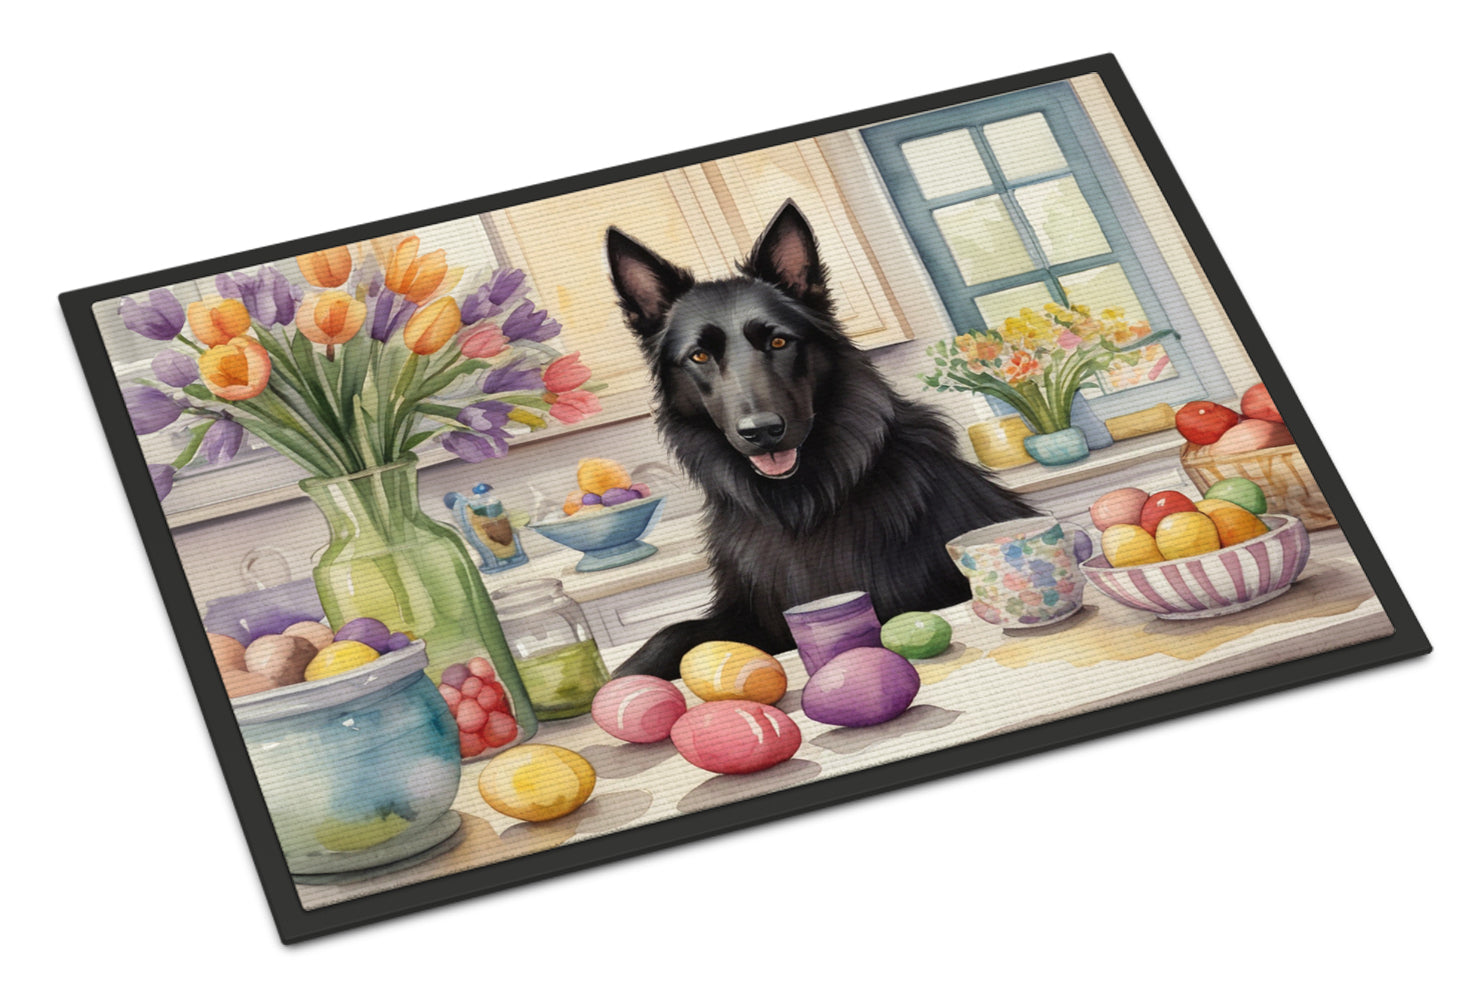 Buy this Decorating Easter Belgian Sheepdog Doormat